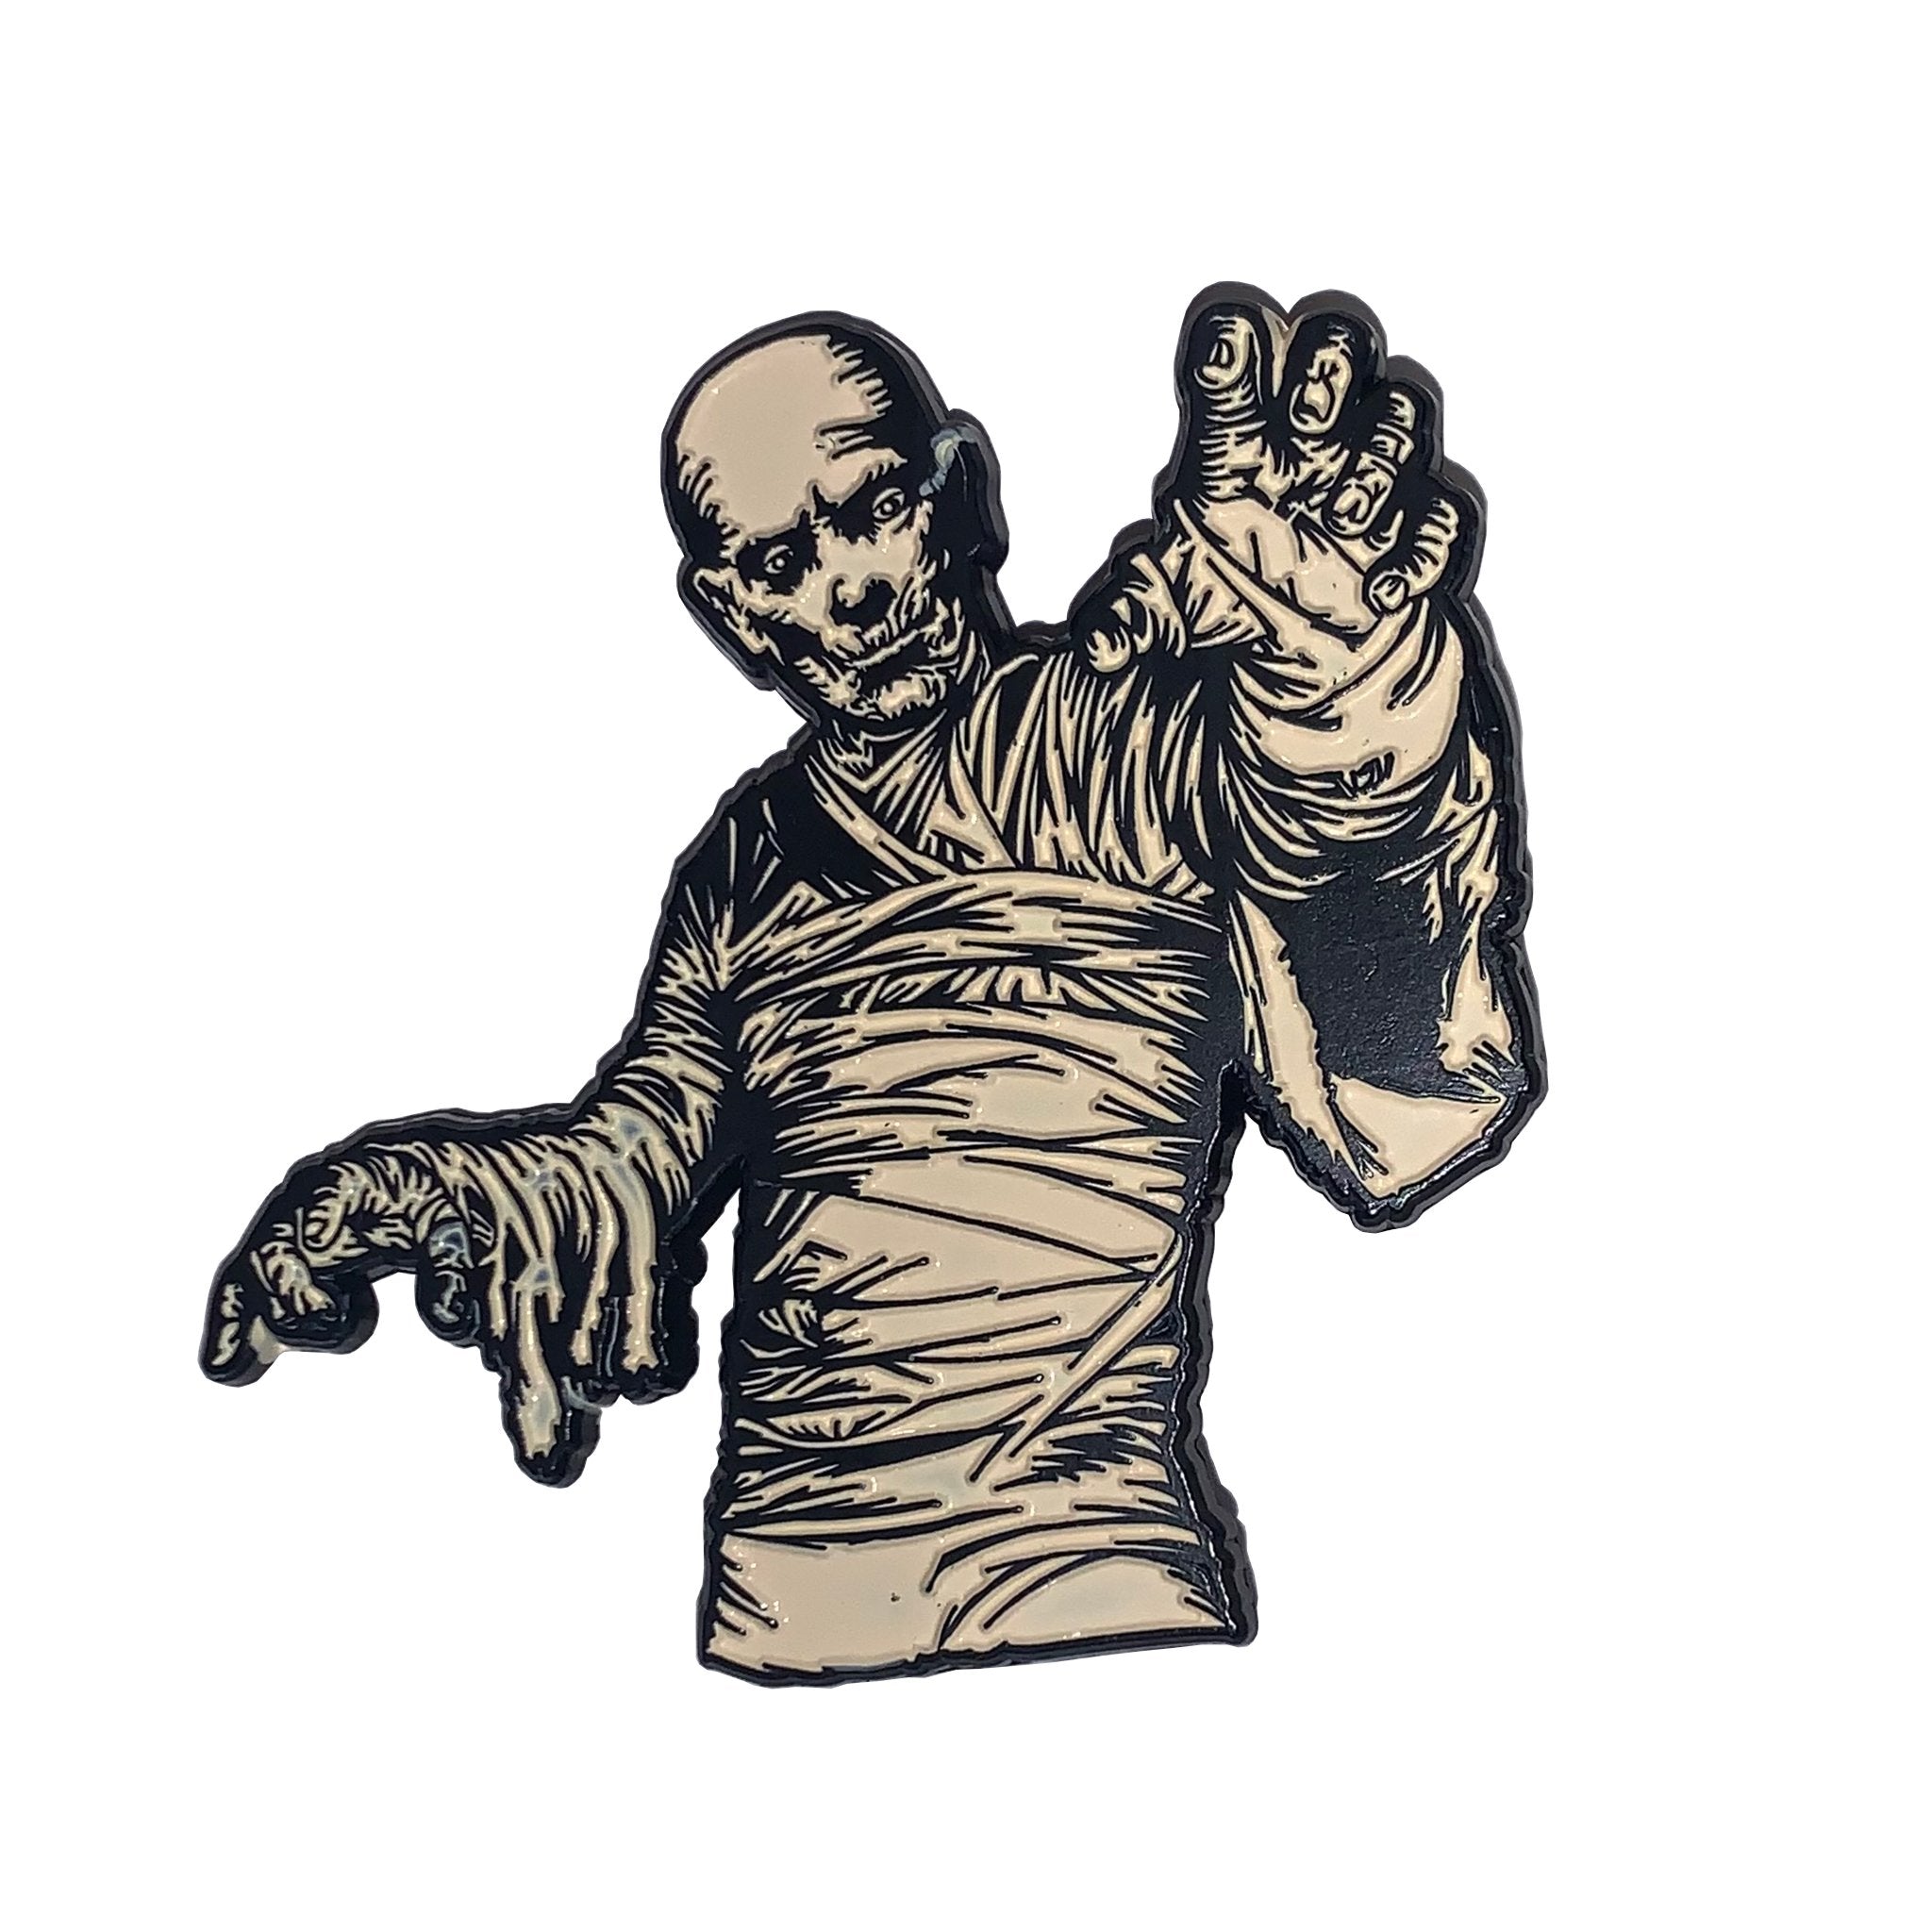 The Mummy enamel pin features Boris Karloff as the classic Universal Studios horror character